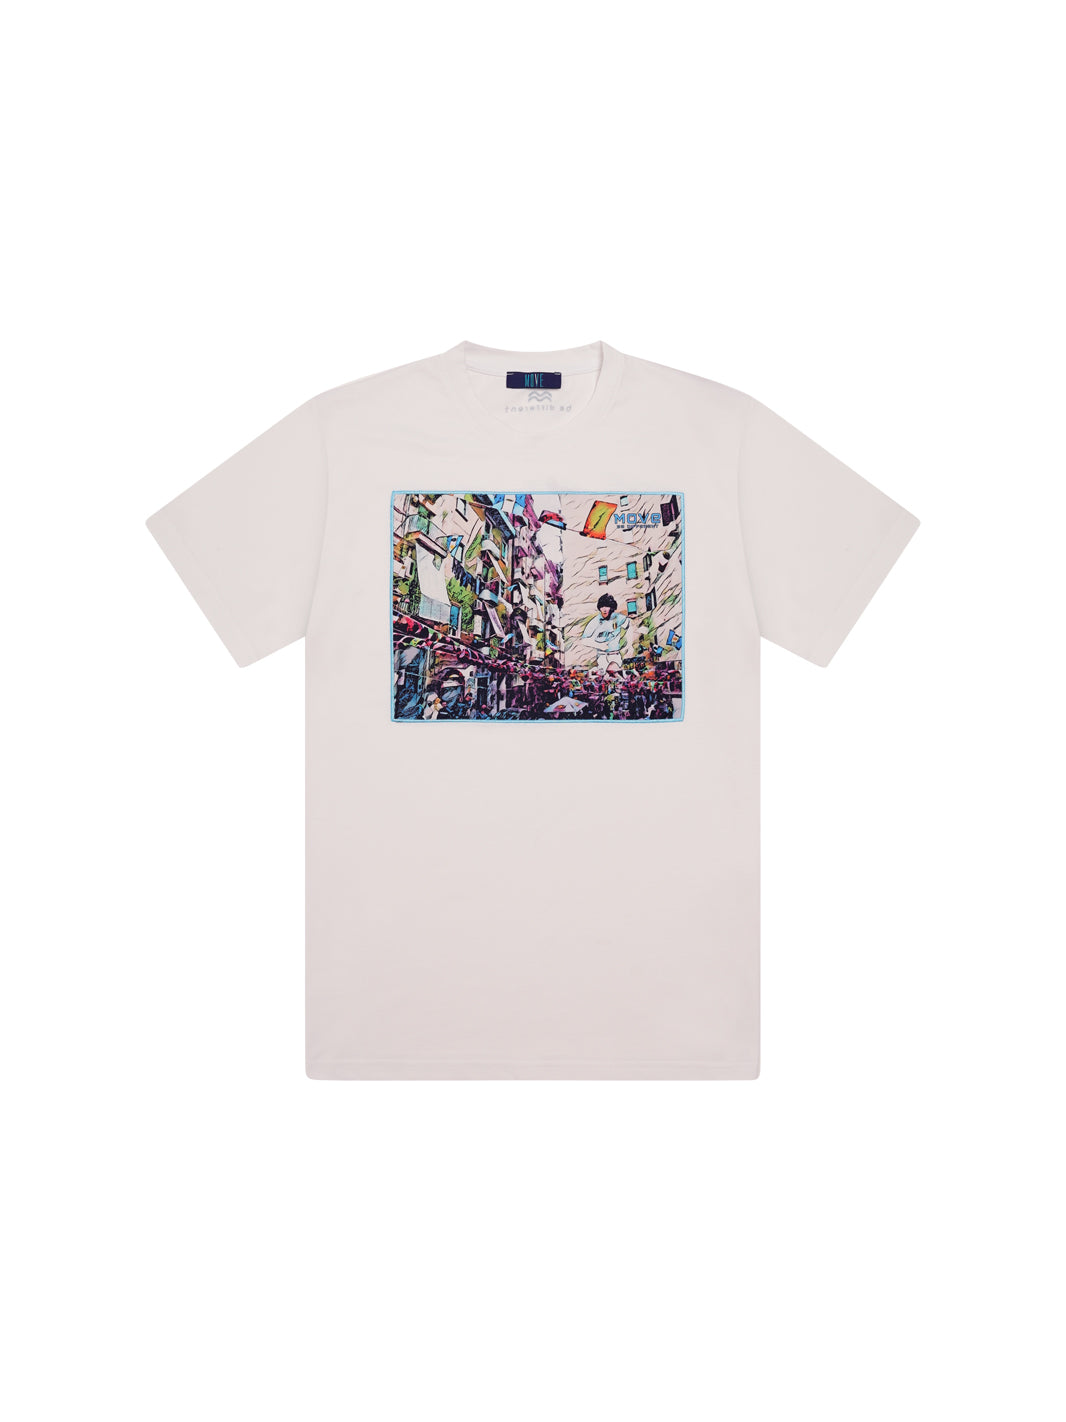 TS Print Boy Quartieri - T-Shirt - Move Beachwear